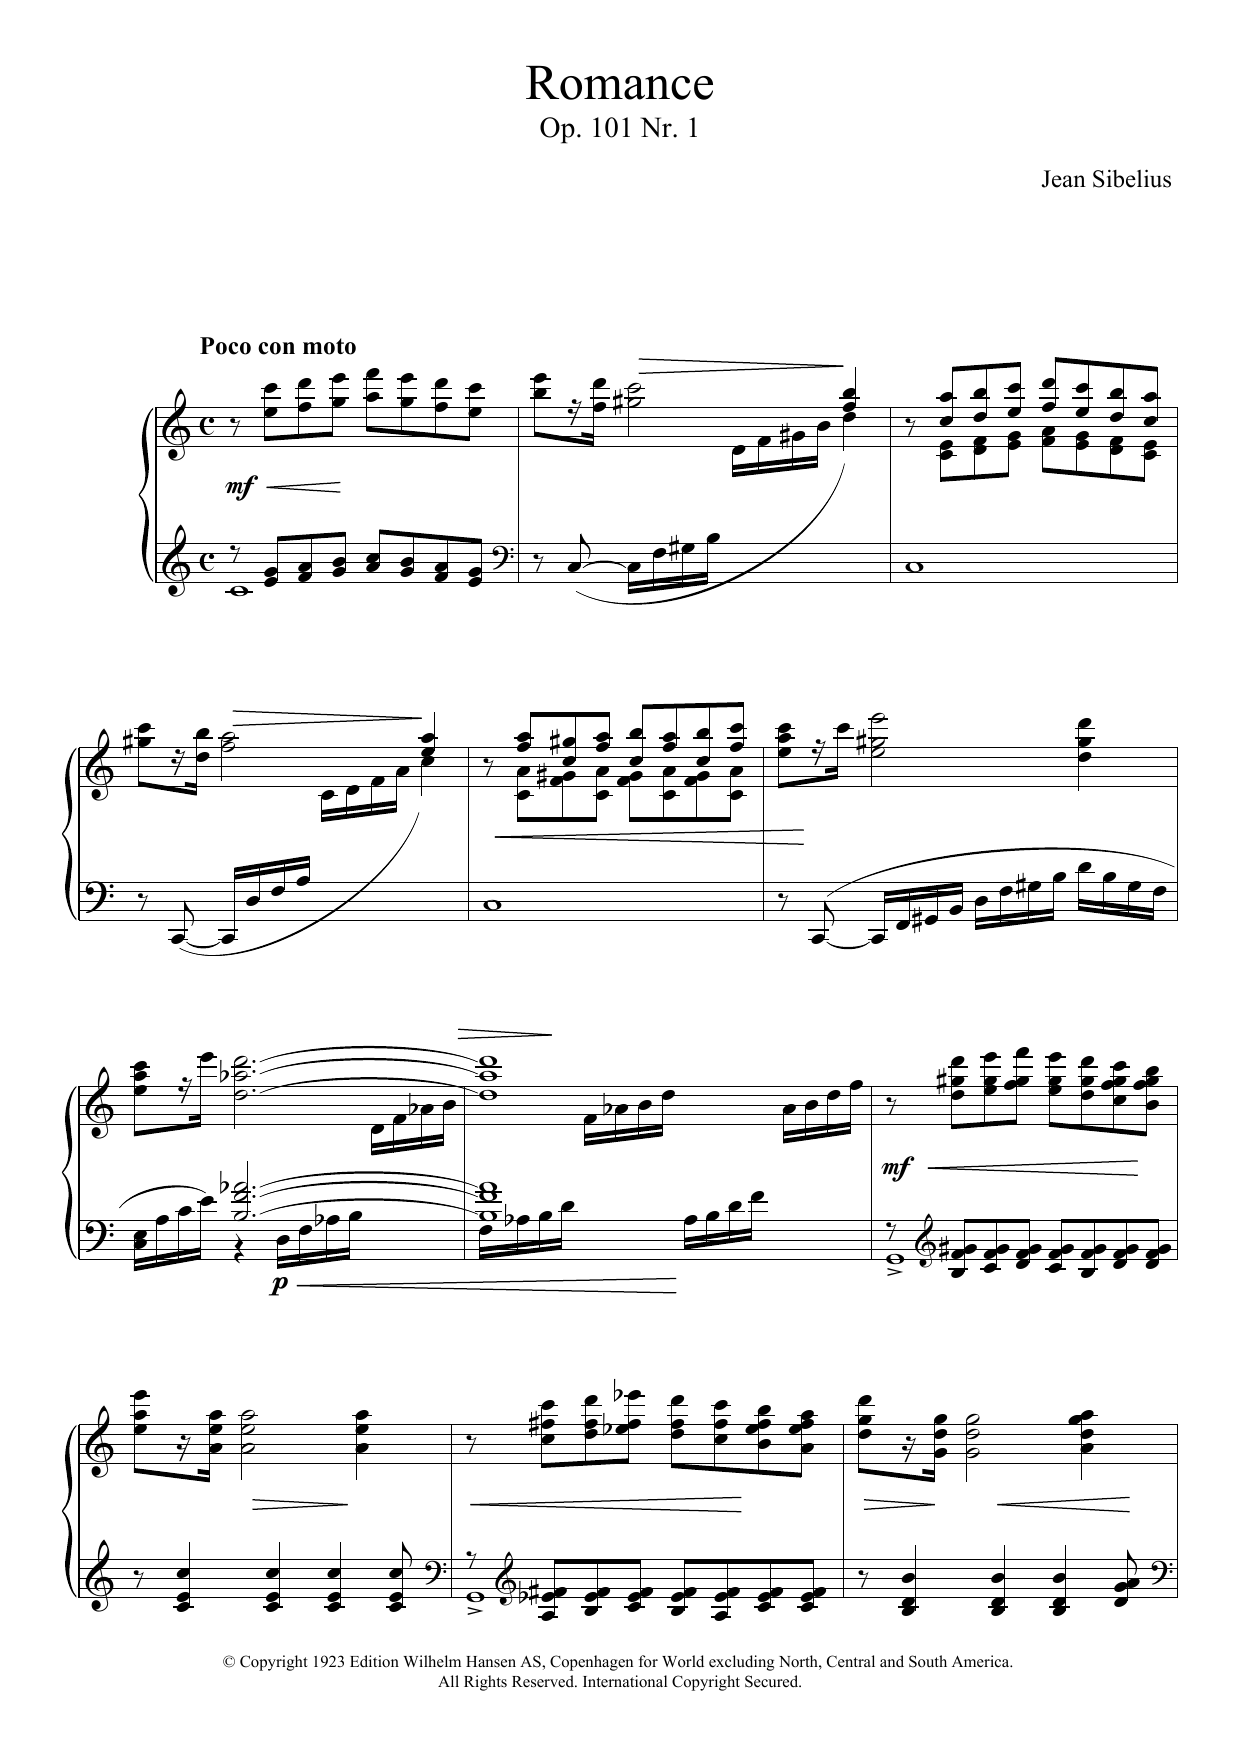 Download Jean Sibelius 5 Morceaux Romantiques, Op.101 - I. Rom Sheet Music